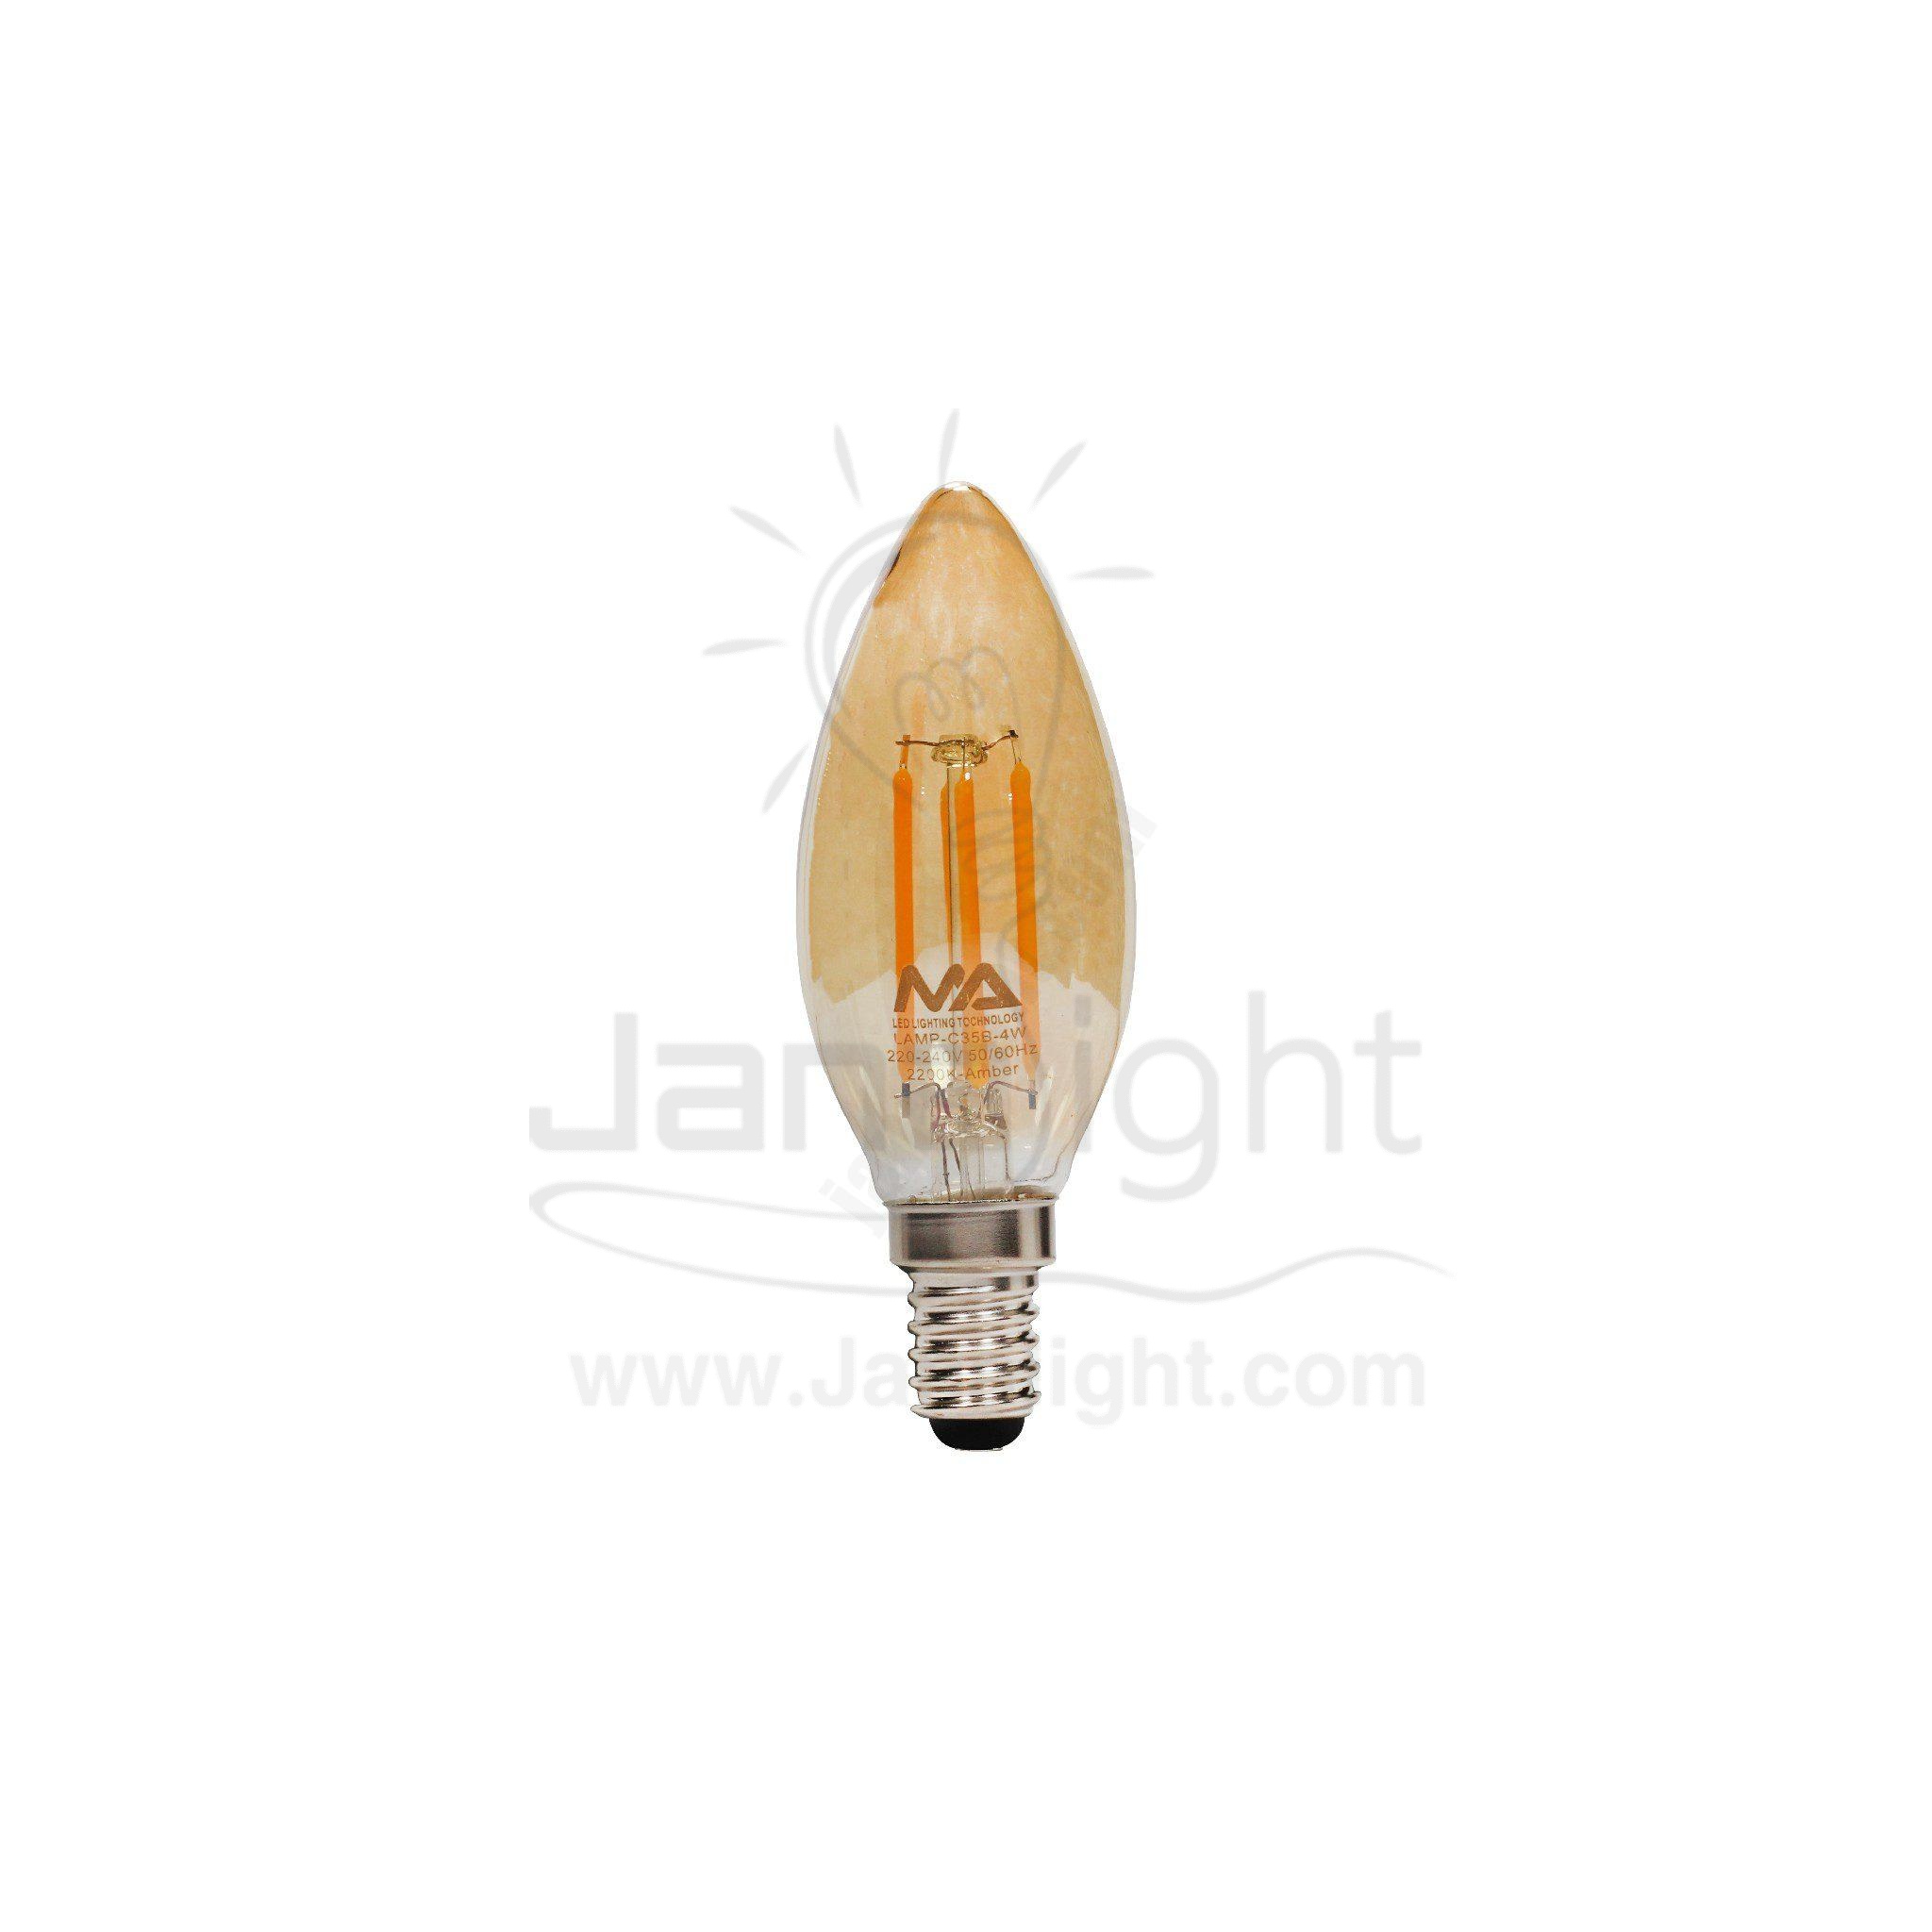 لمبة بلحة 4 وات وورم فلامنت اديسون LED Filament Edison Candle Light Bulb 4watt warm